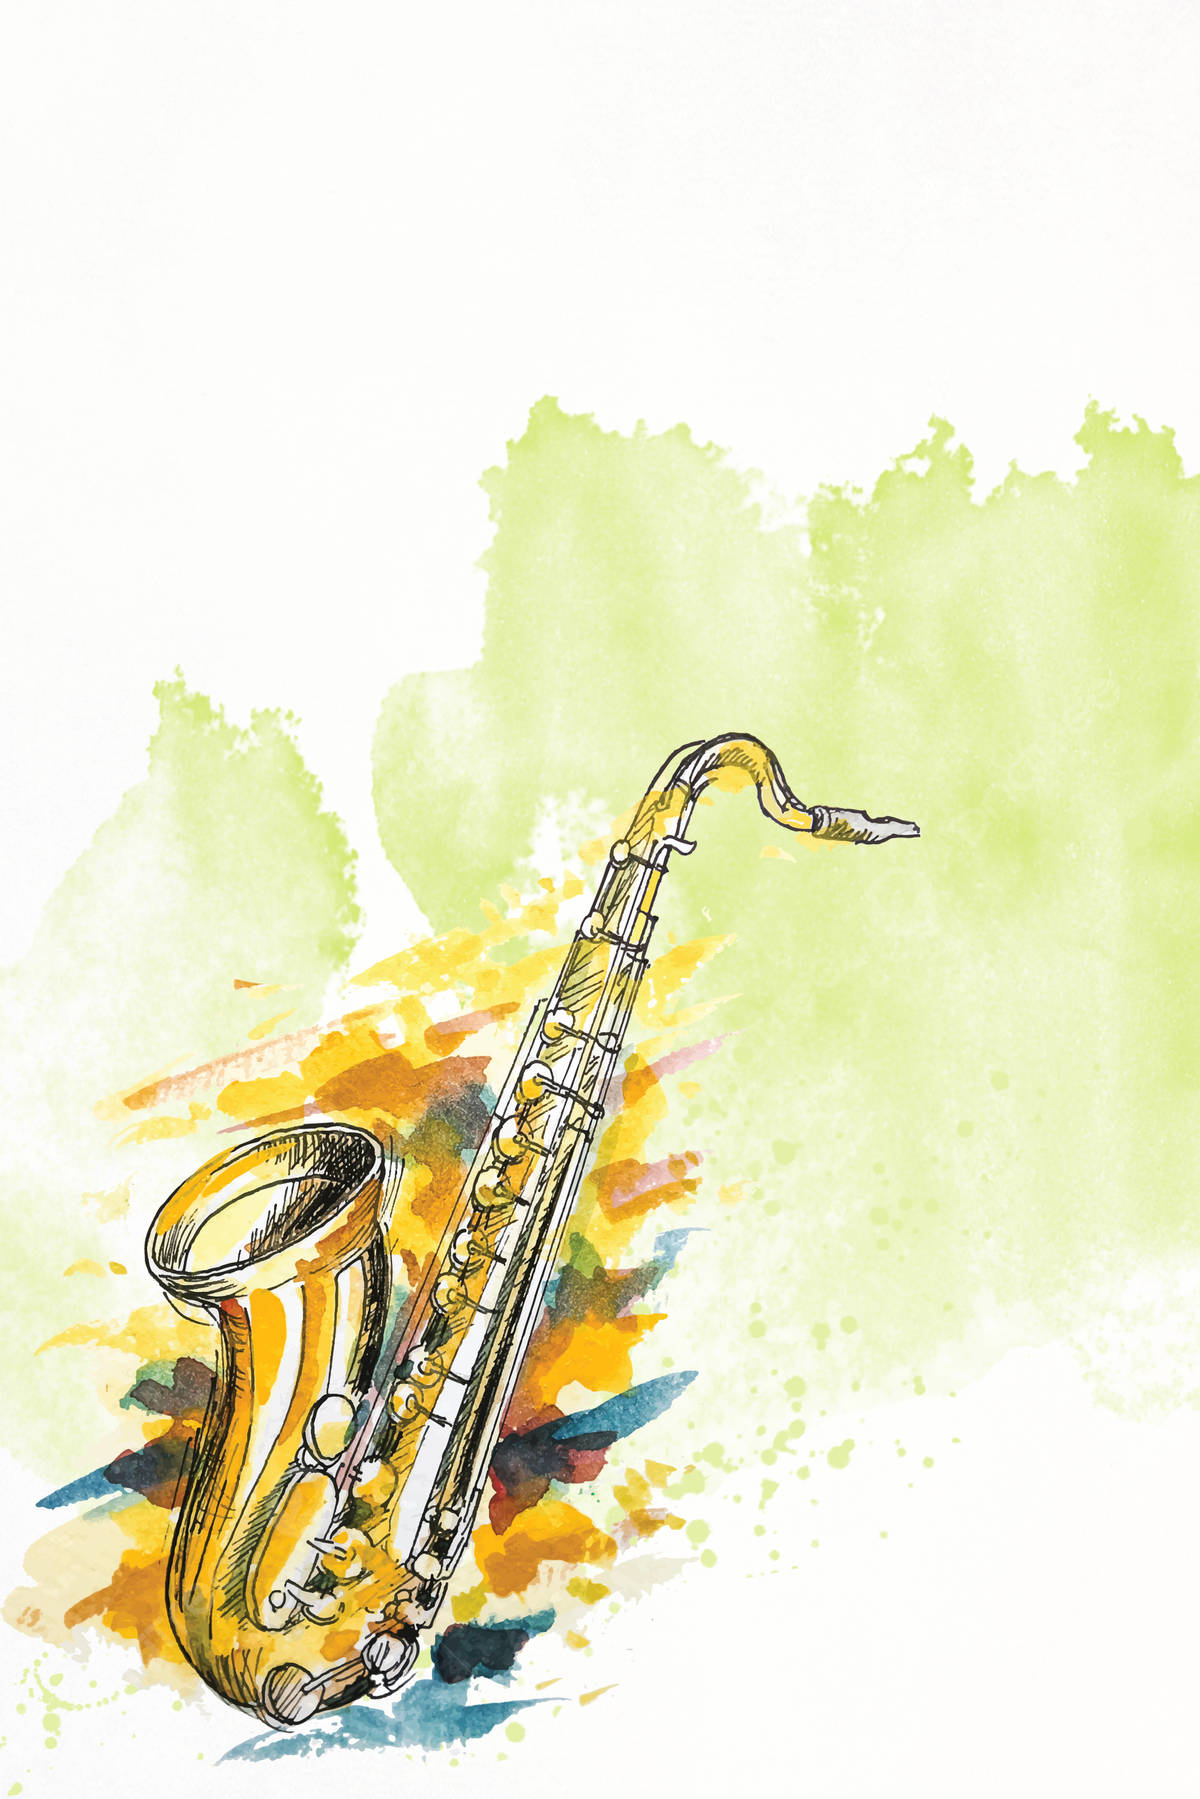 Saxophone Jazz Artwork Wallpaper